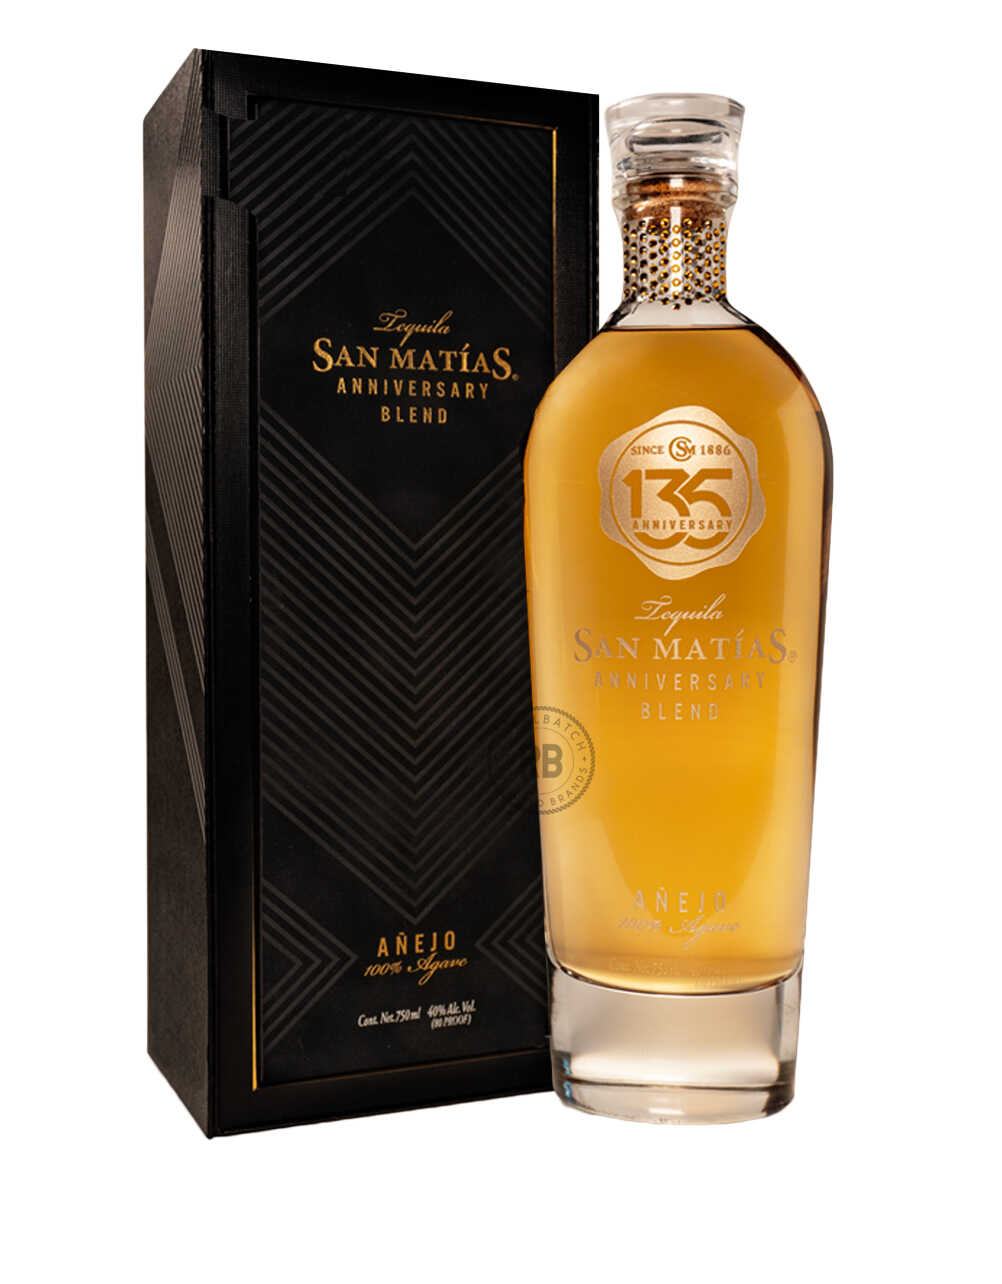 San Matias 135 Year Anniversary Blend Anejo Tequila